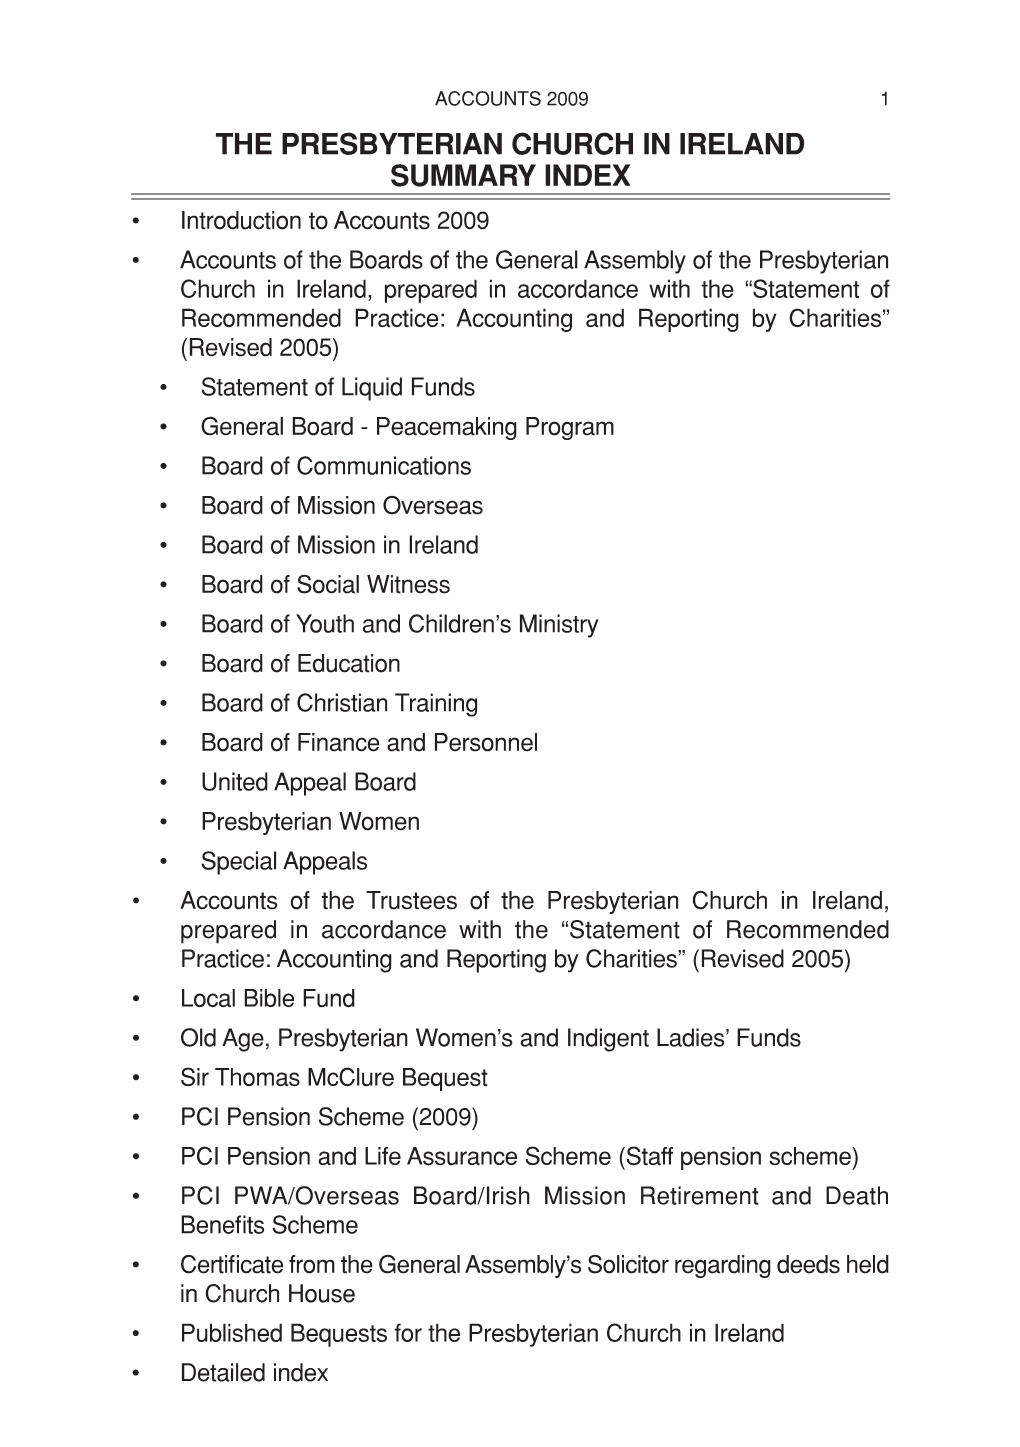 PCI Statement of Accounts 2009